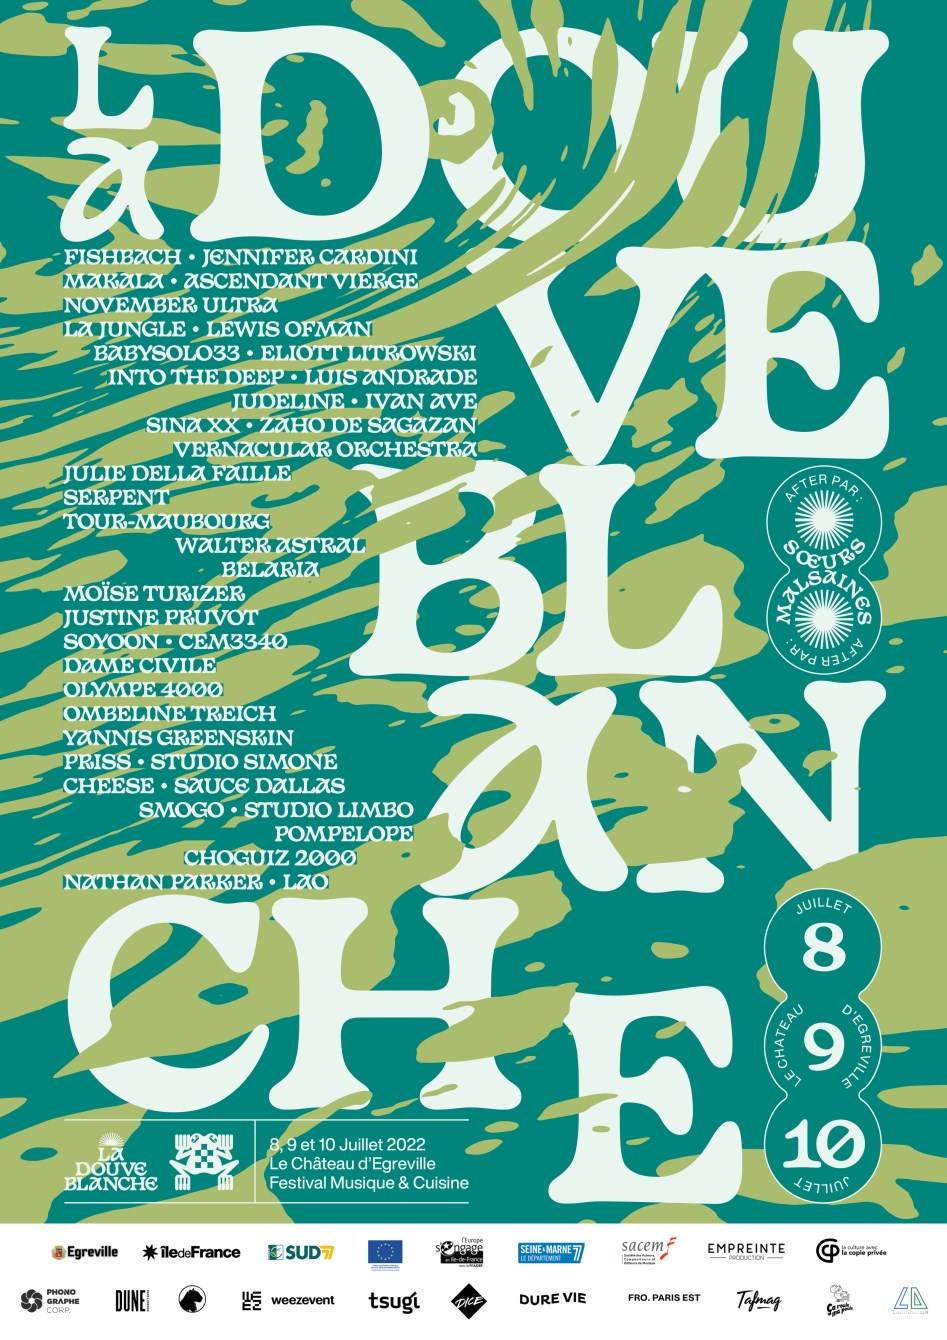 La Douve Blanche Festival 2022 - Página frontal